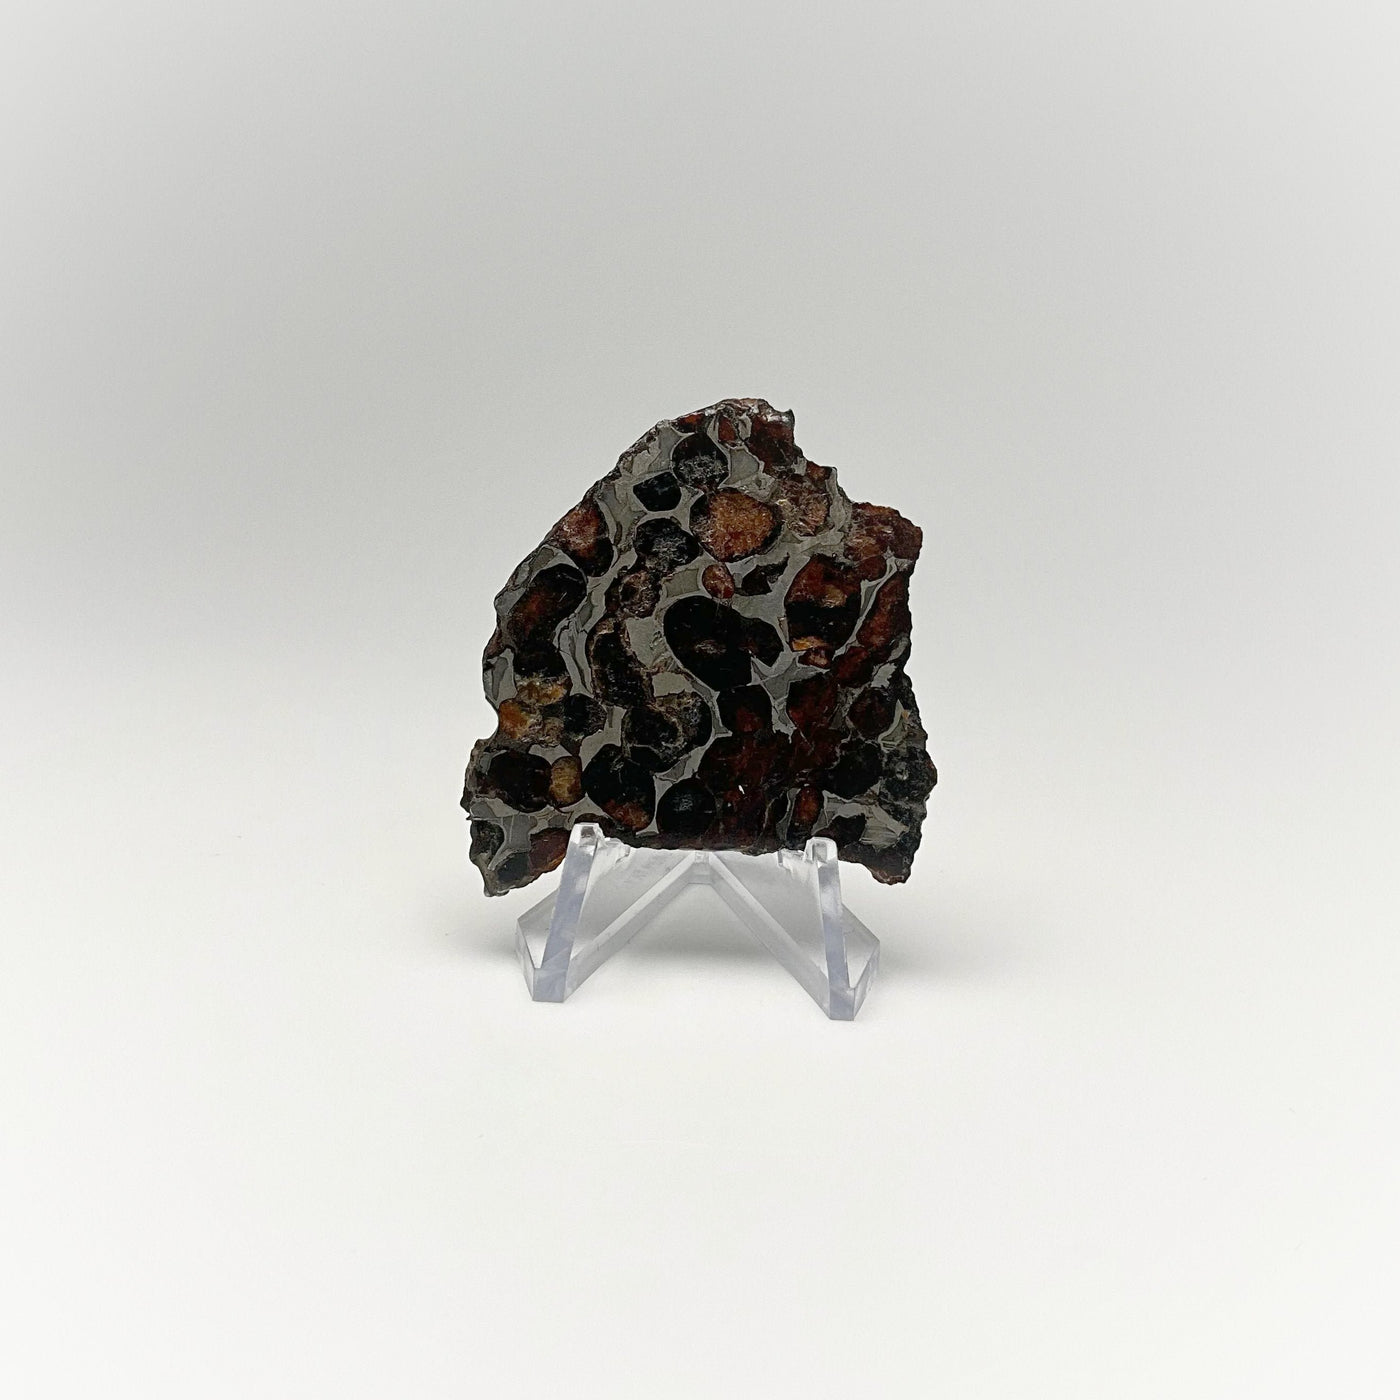 Sericho Meteorite Slice